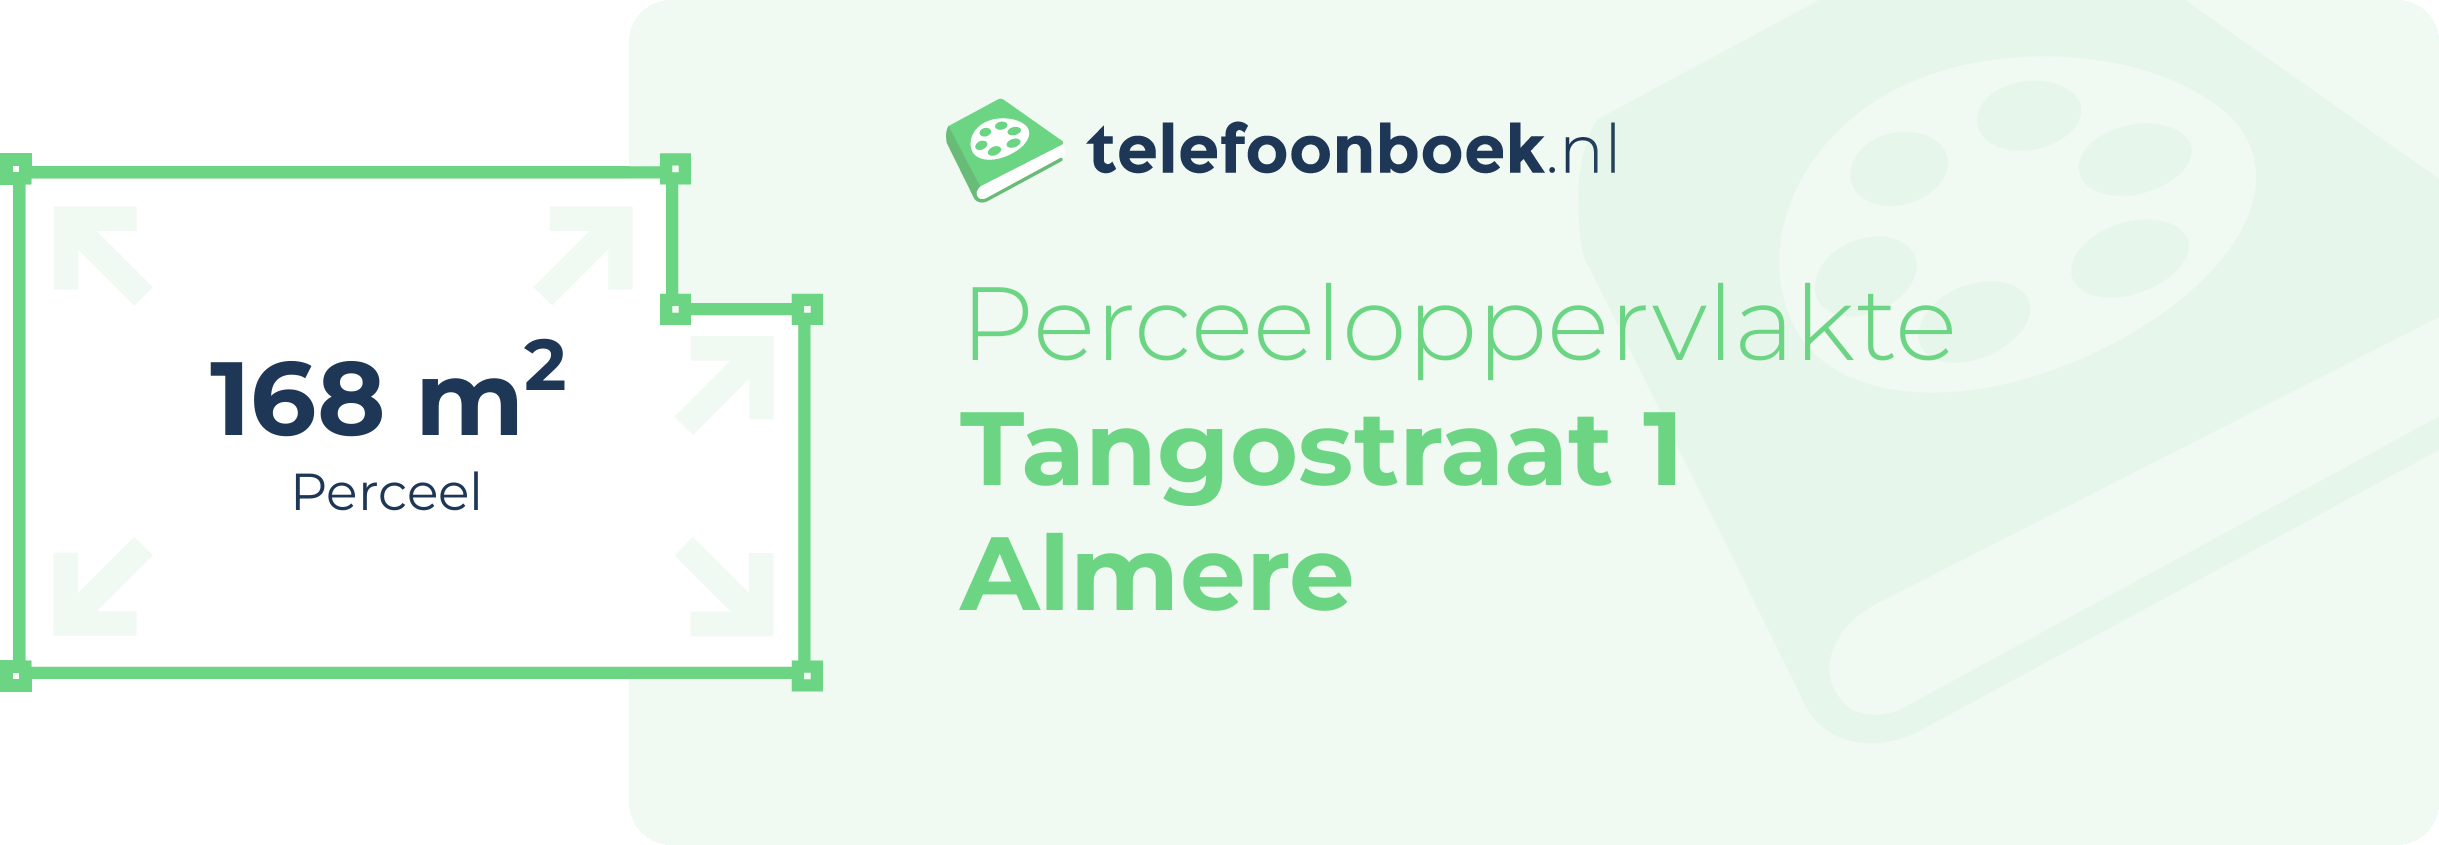 Perceeloppervlakte Tangostraat 1 Almere